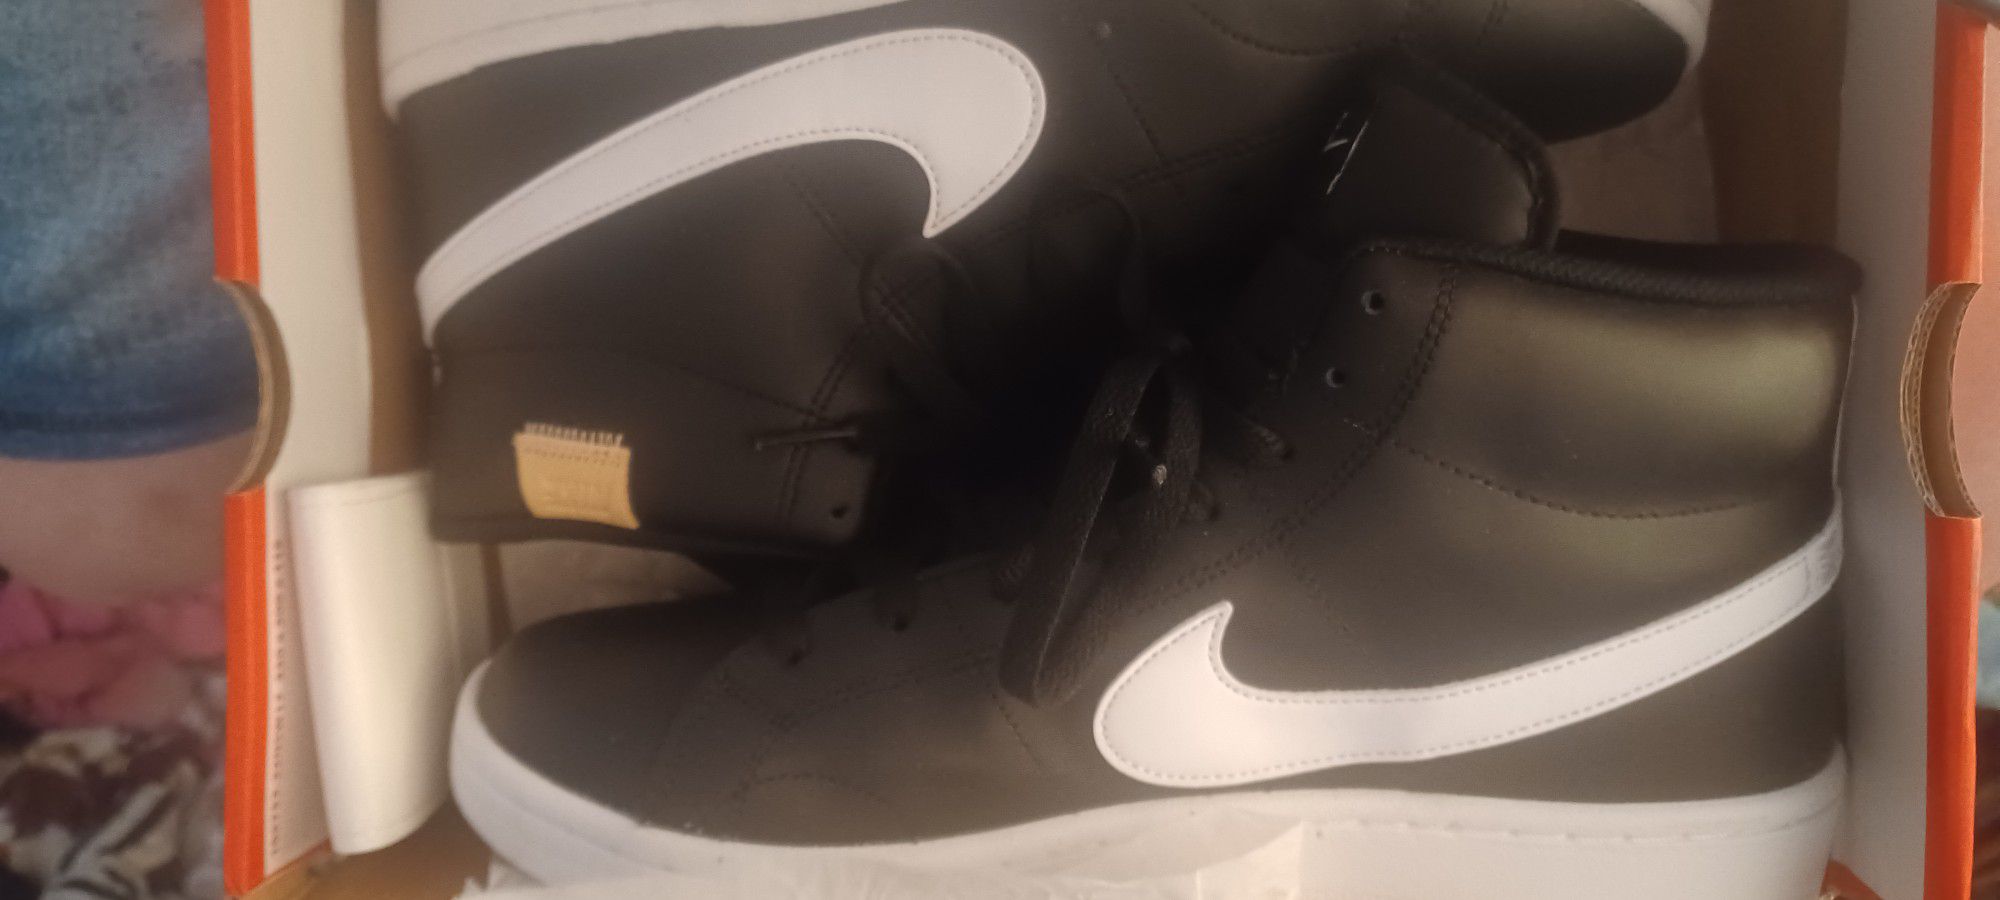 10.5 Black And White Nike